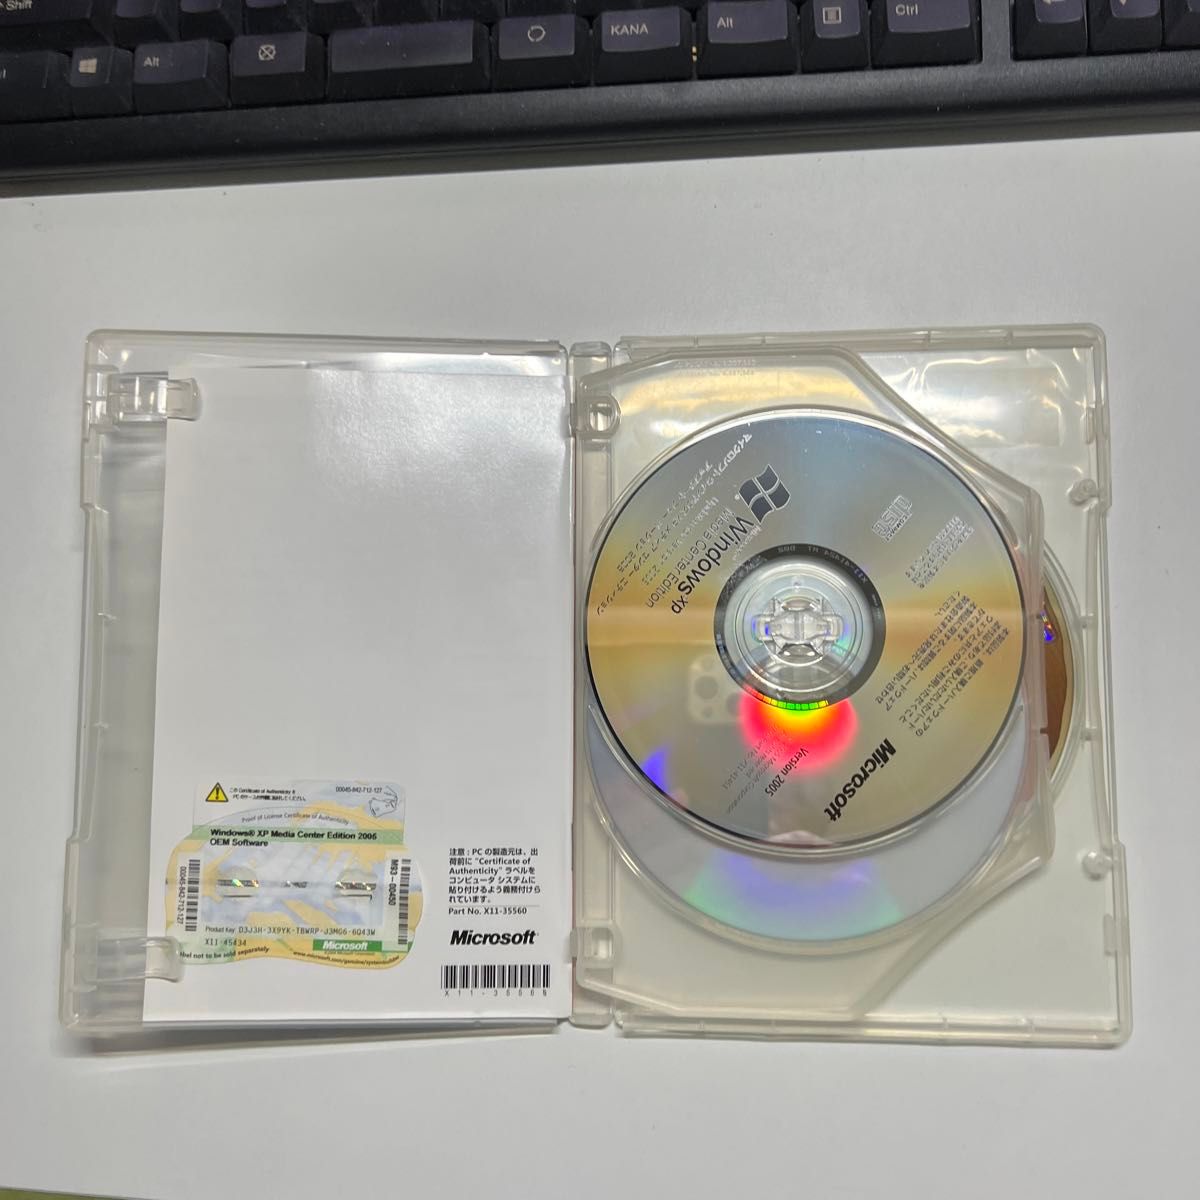  Windows X P  Media  Center  Edition 2005